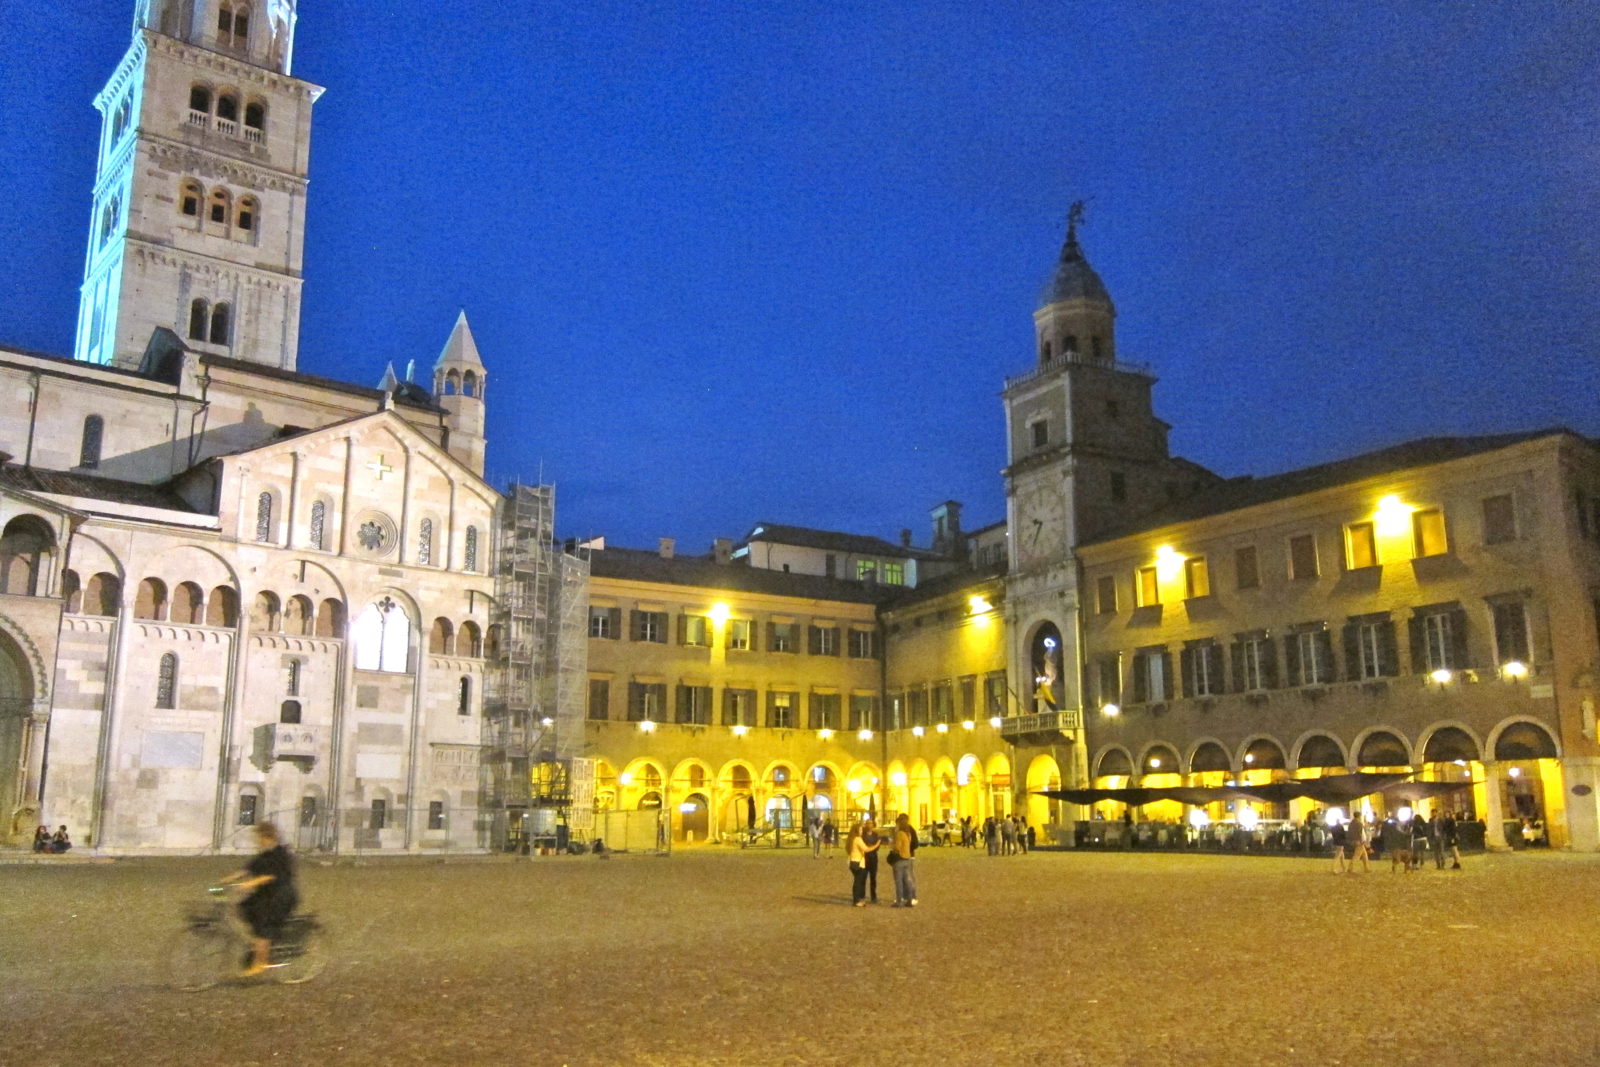 Modena's Piaza Grande in the evening